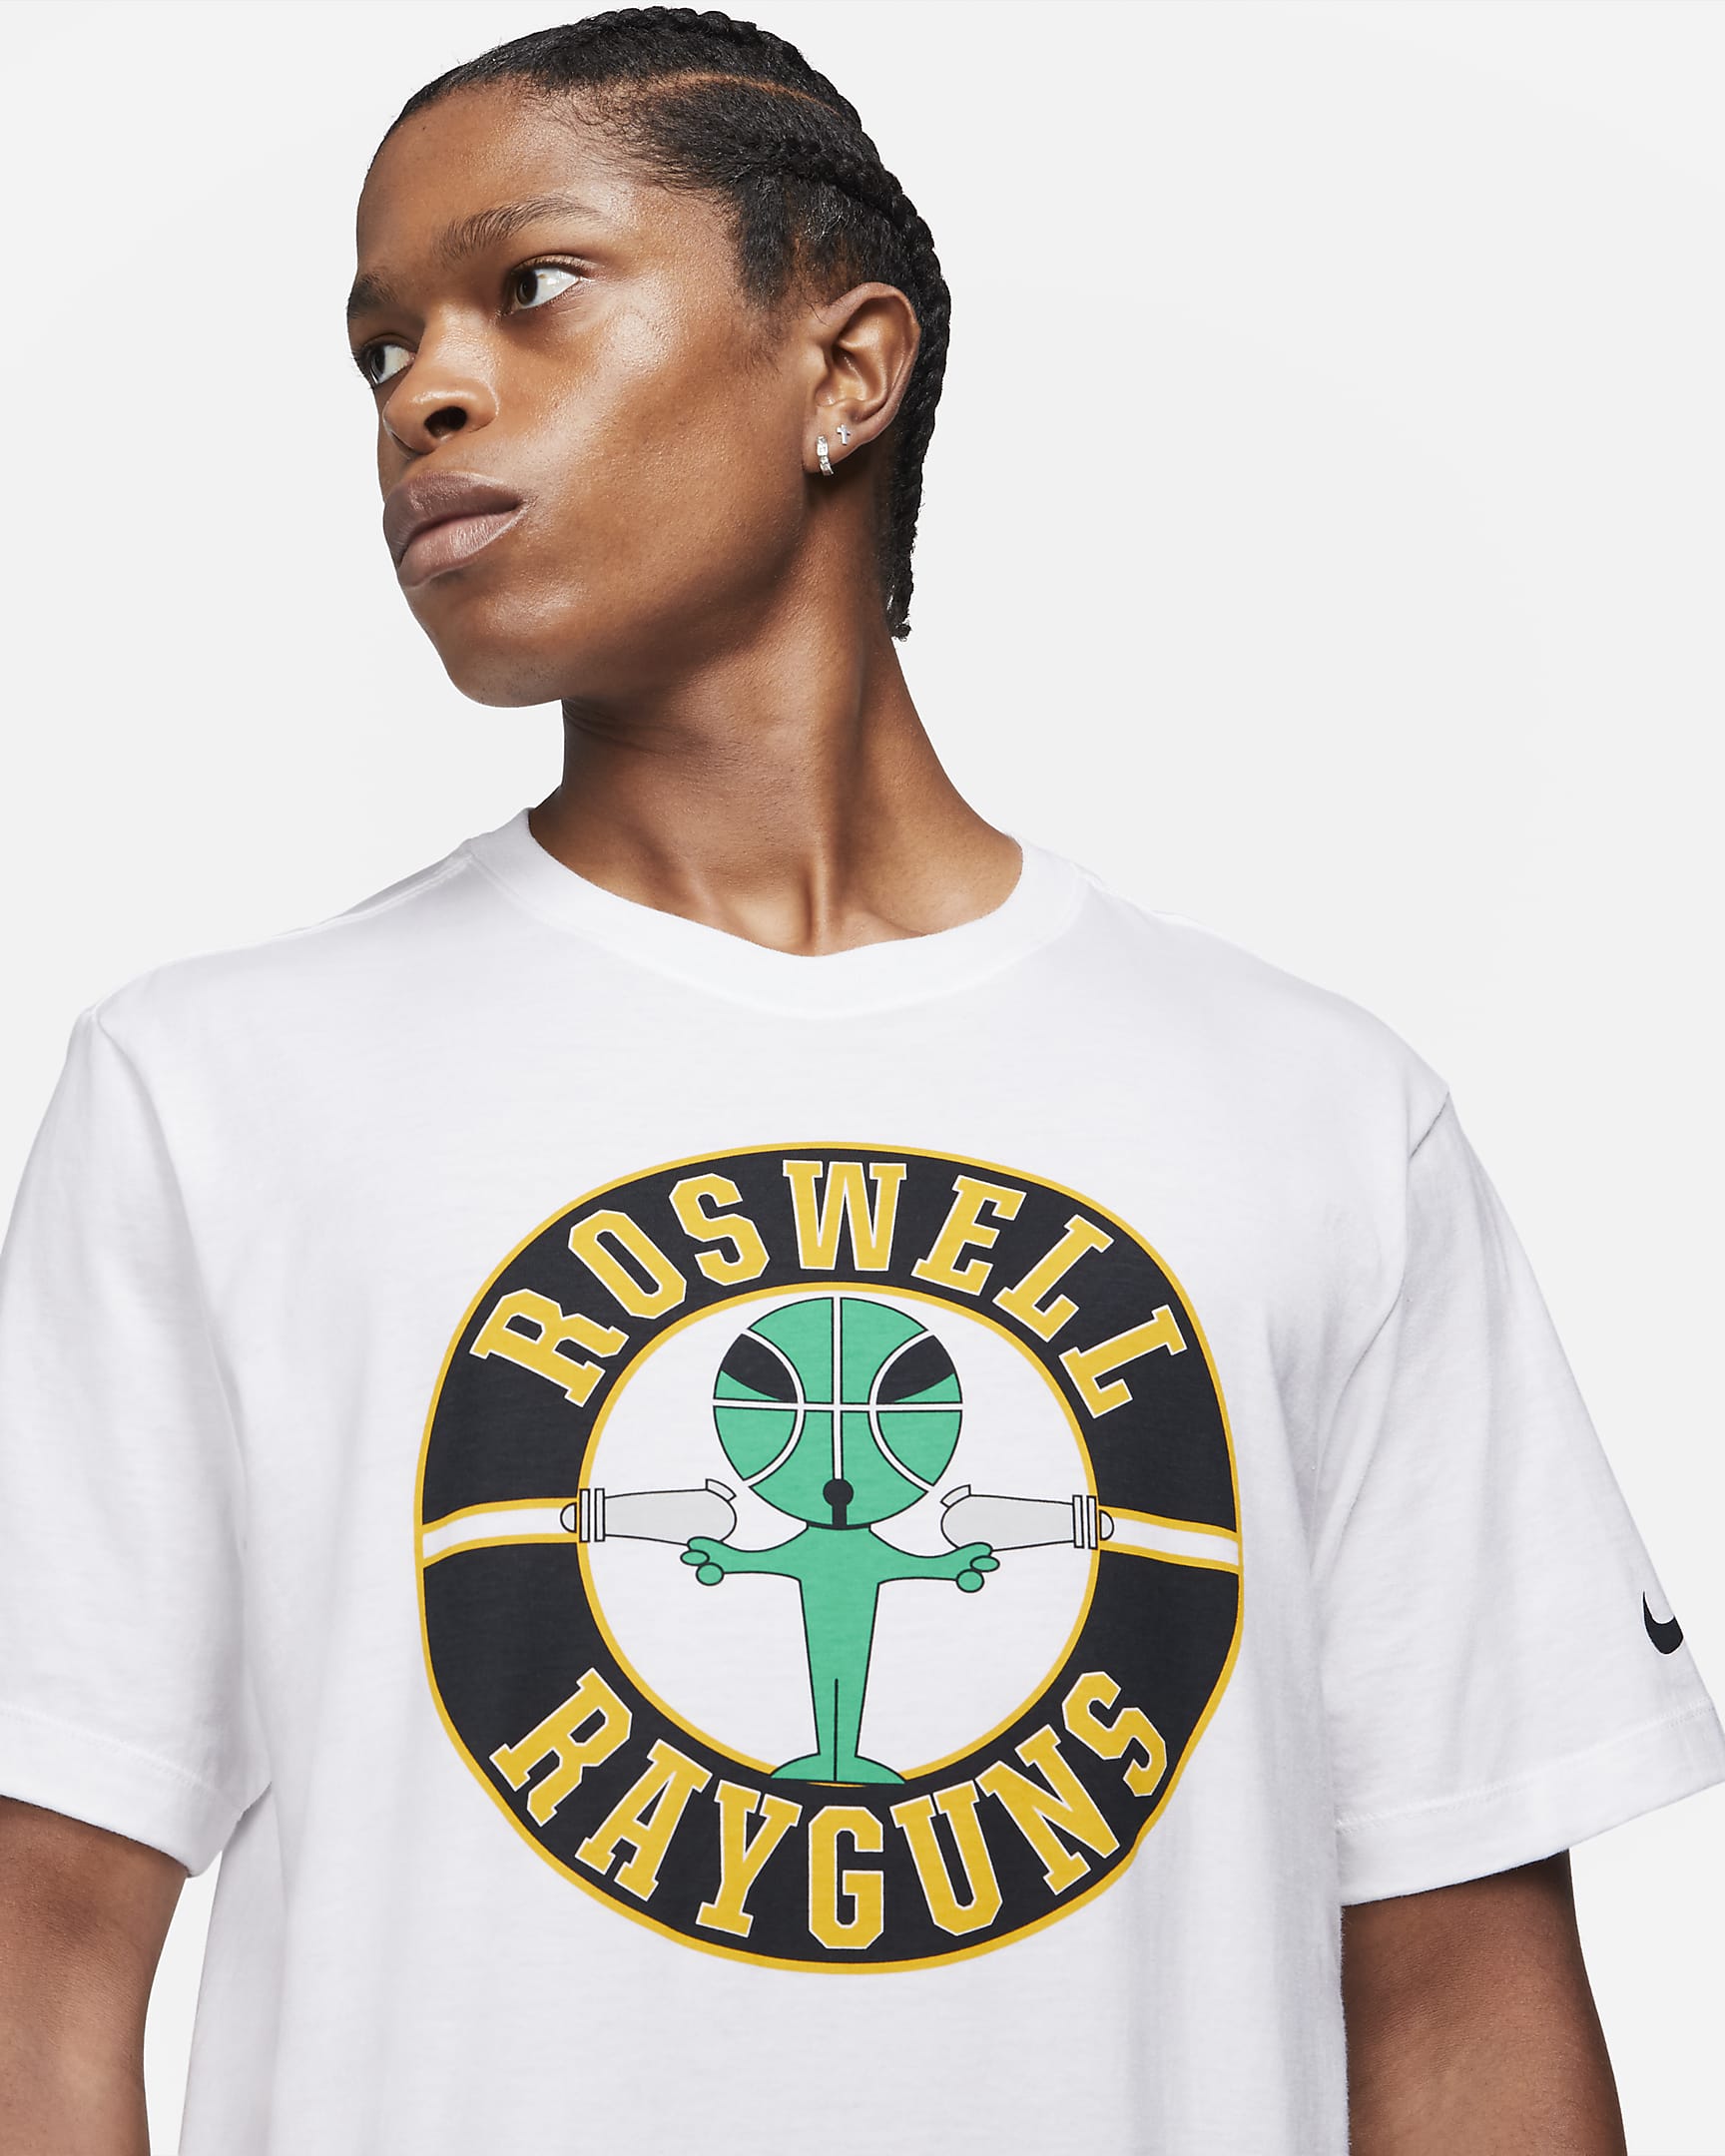 rayguns-mens-basketball-t-shirt-kgKBwR-2